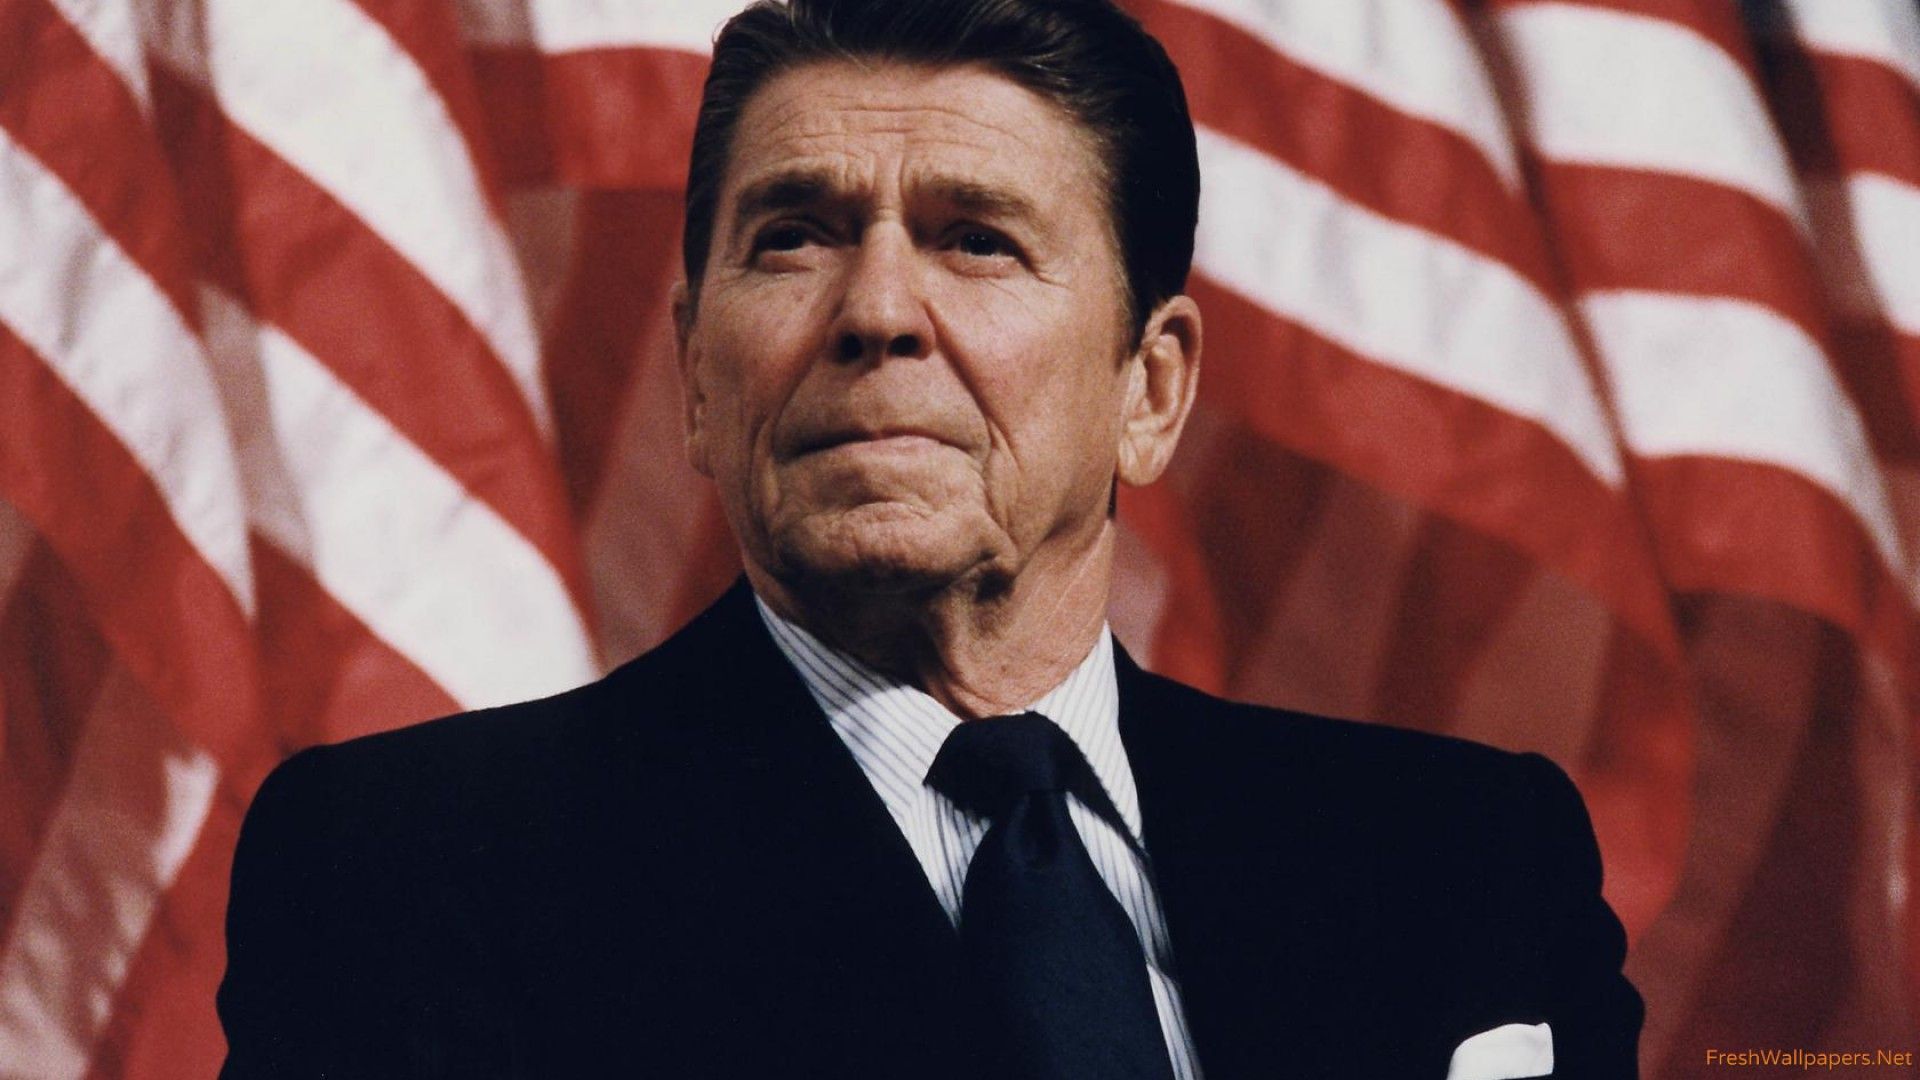 Ronald Reagan President wallpapers Freshwallpapers